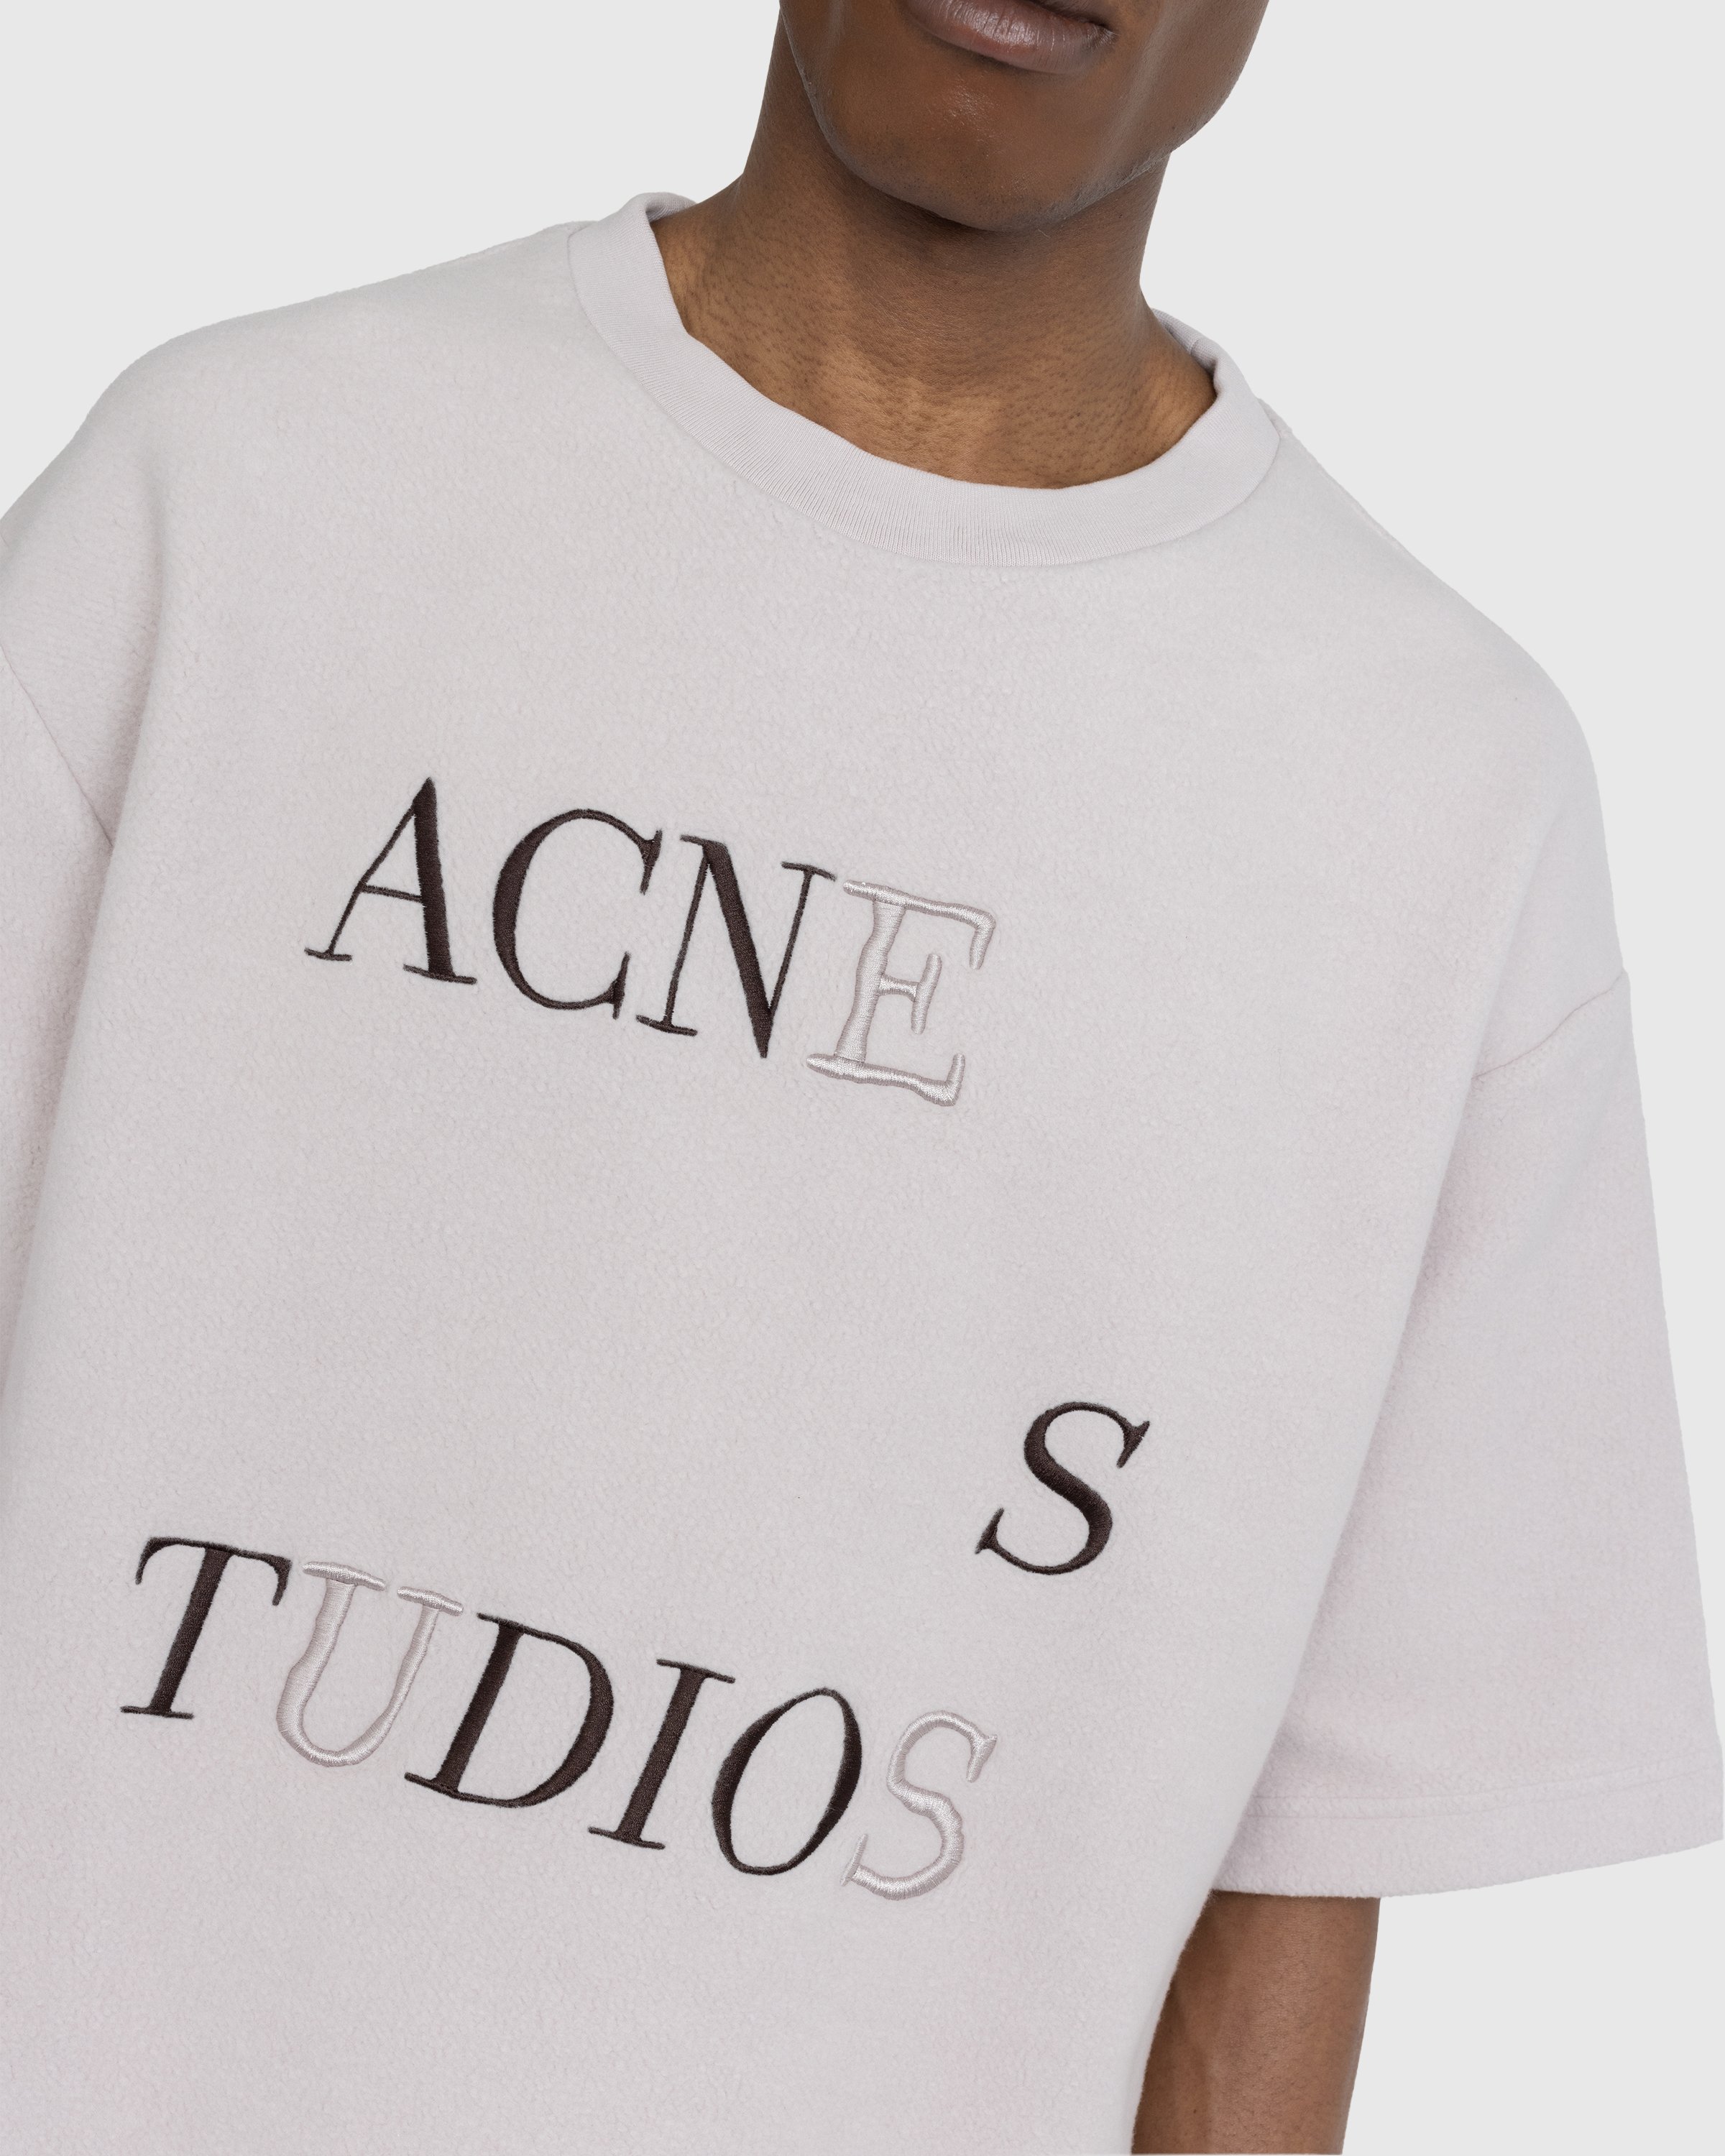 Acne Studios - Logo T-Shirt Beige - Clothing - Beige - Image 4